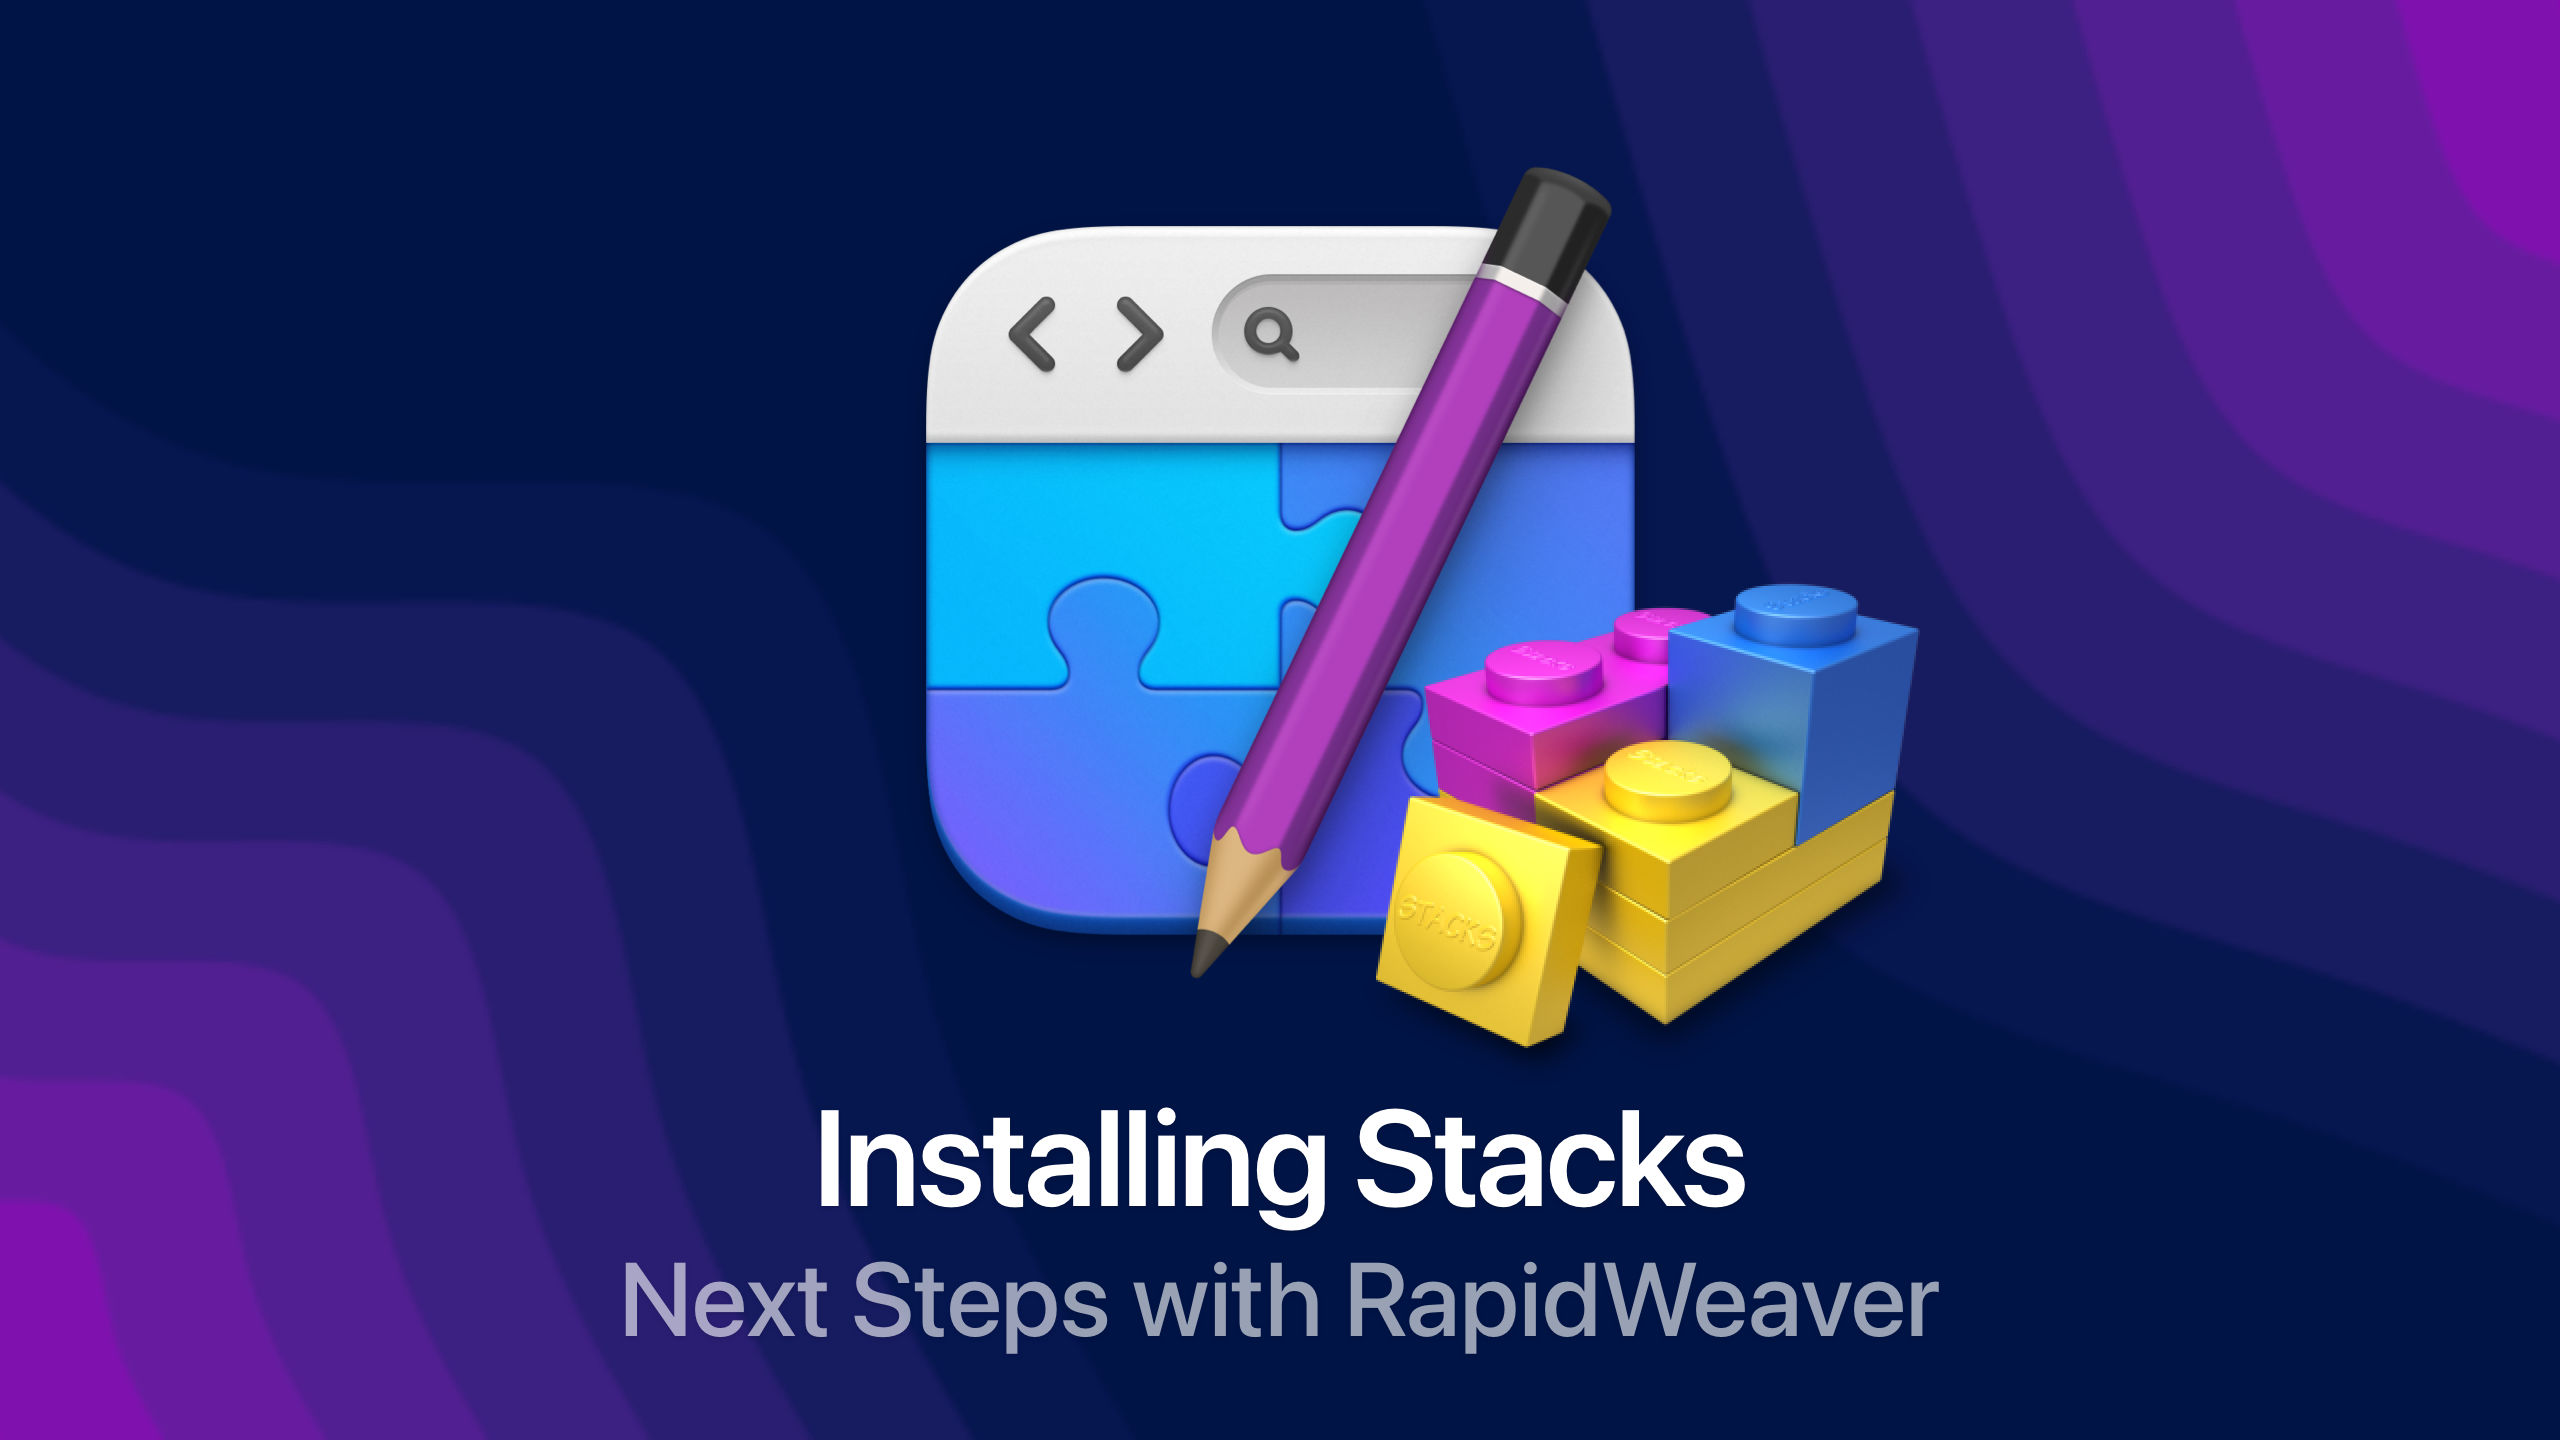 Installing Stacks for RapidWeaver